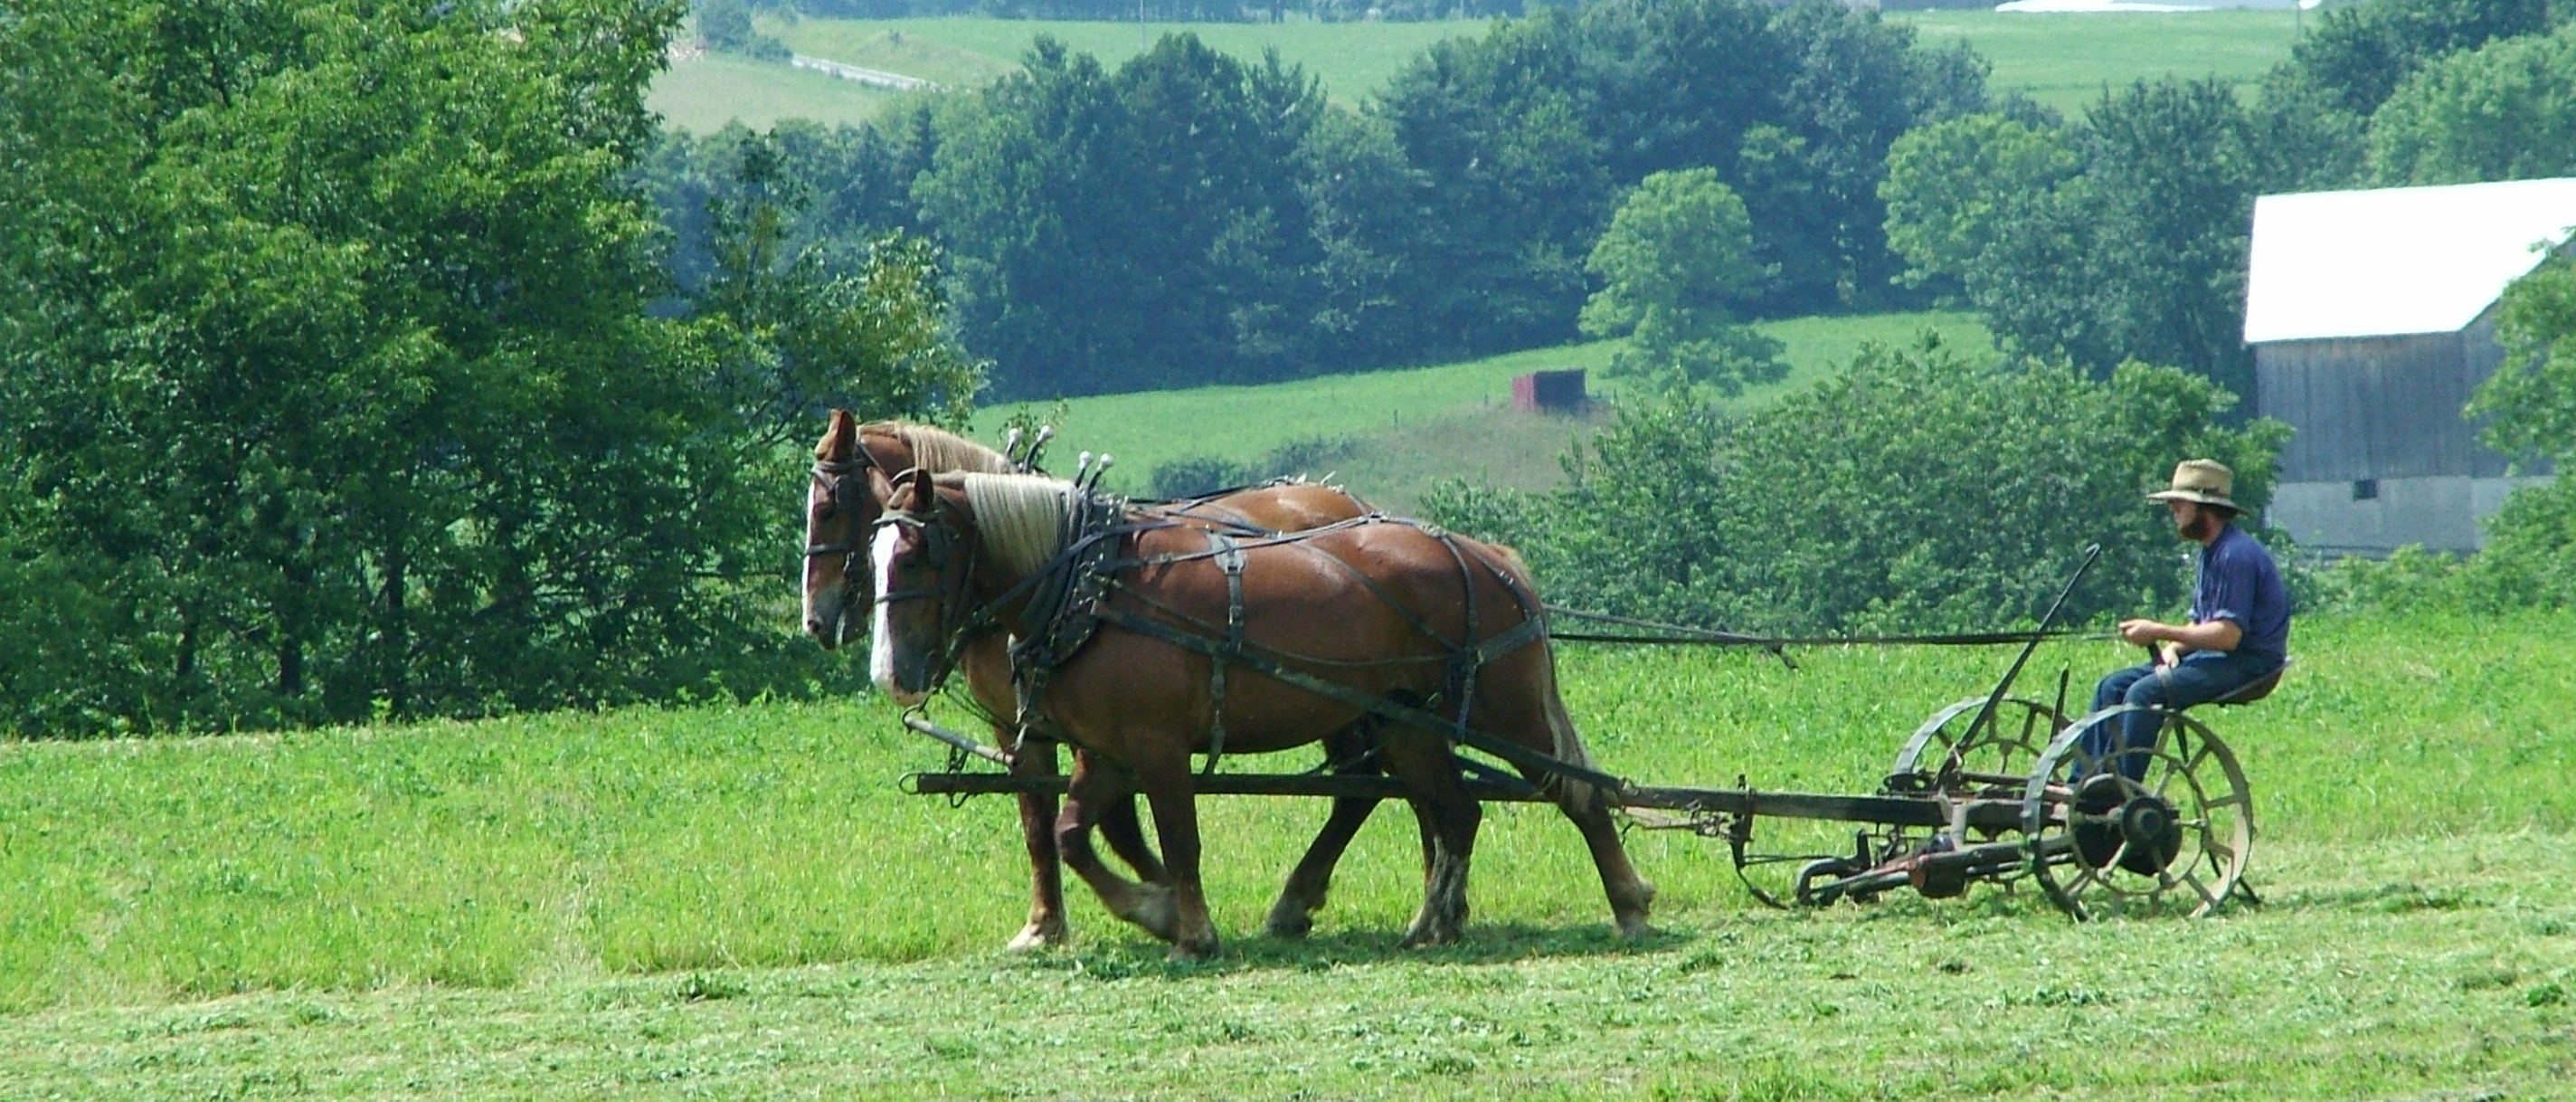 Amish farmer mowing field using horse drawn equipment